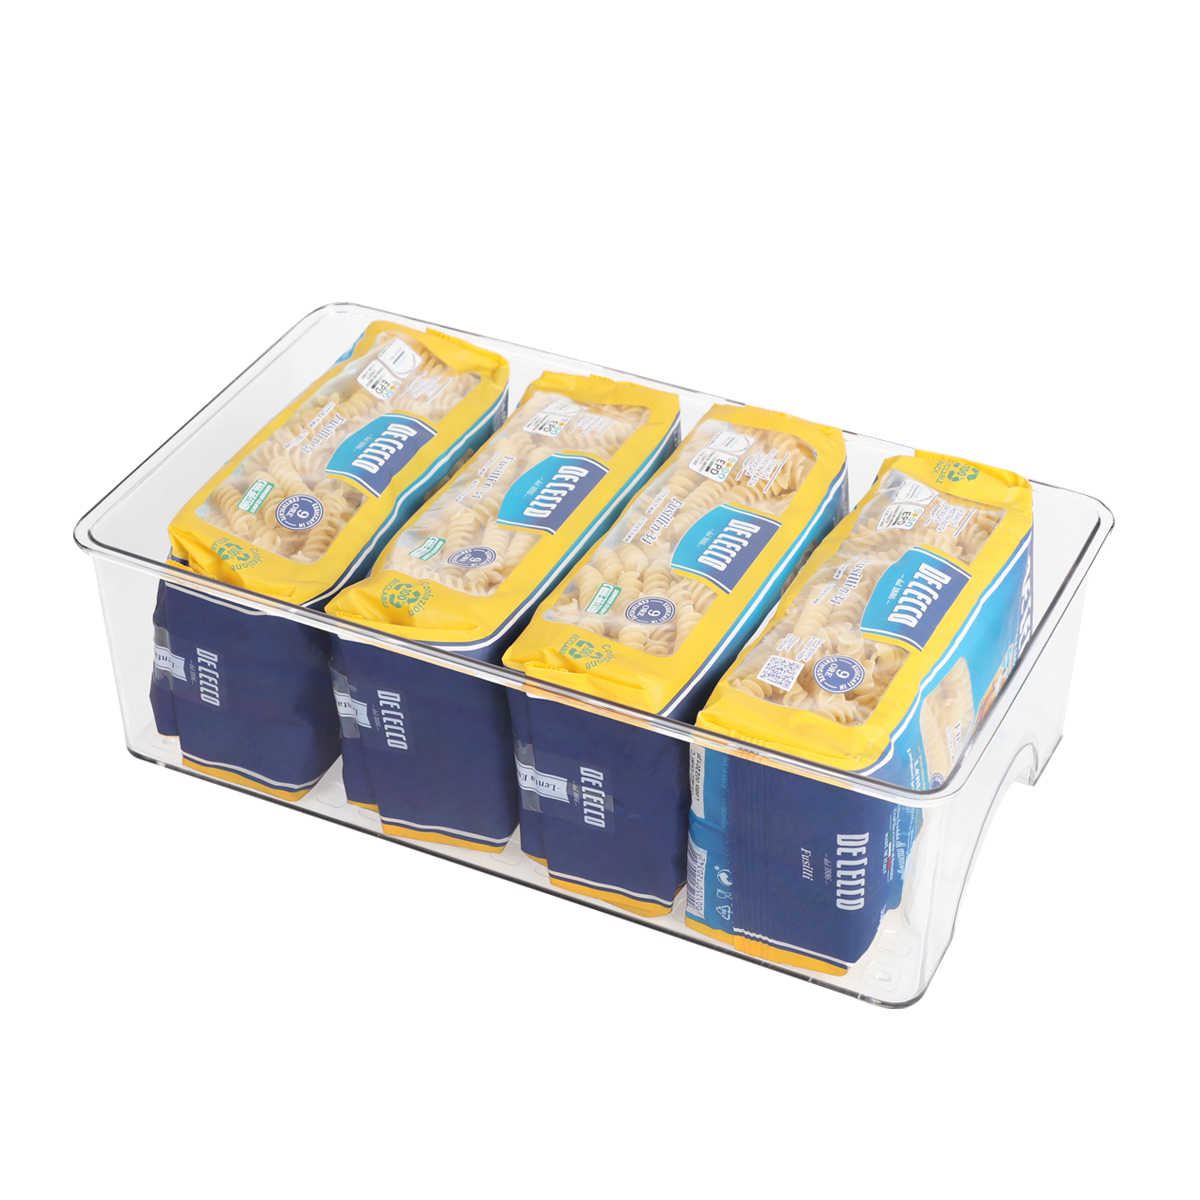 Plastic Multi-functional Fridge Storage Boxes with Handles